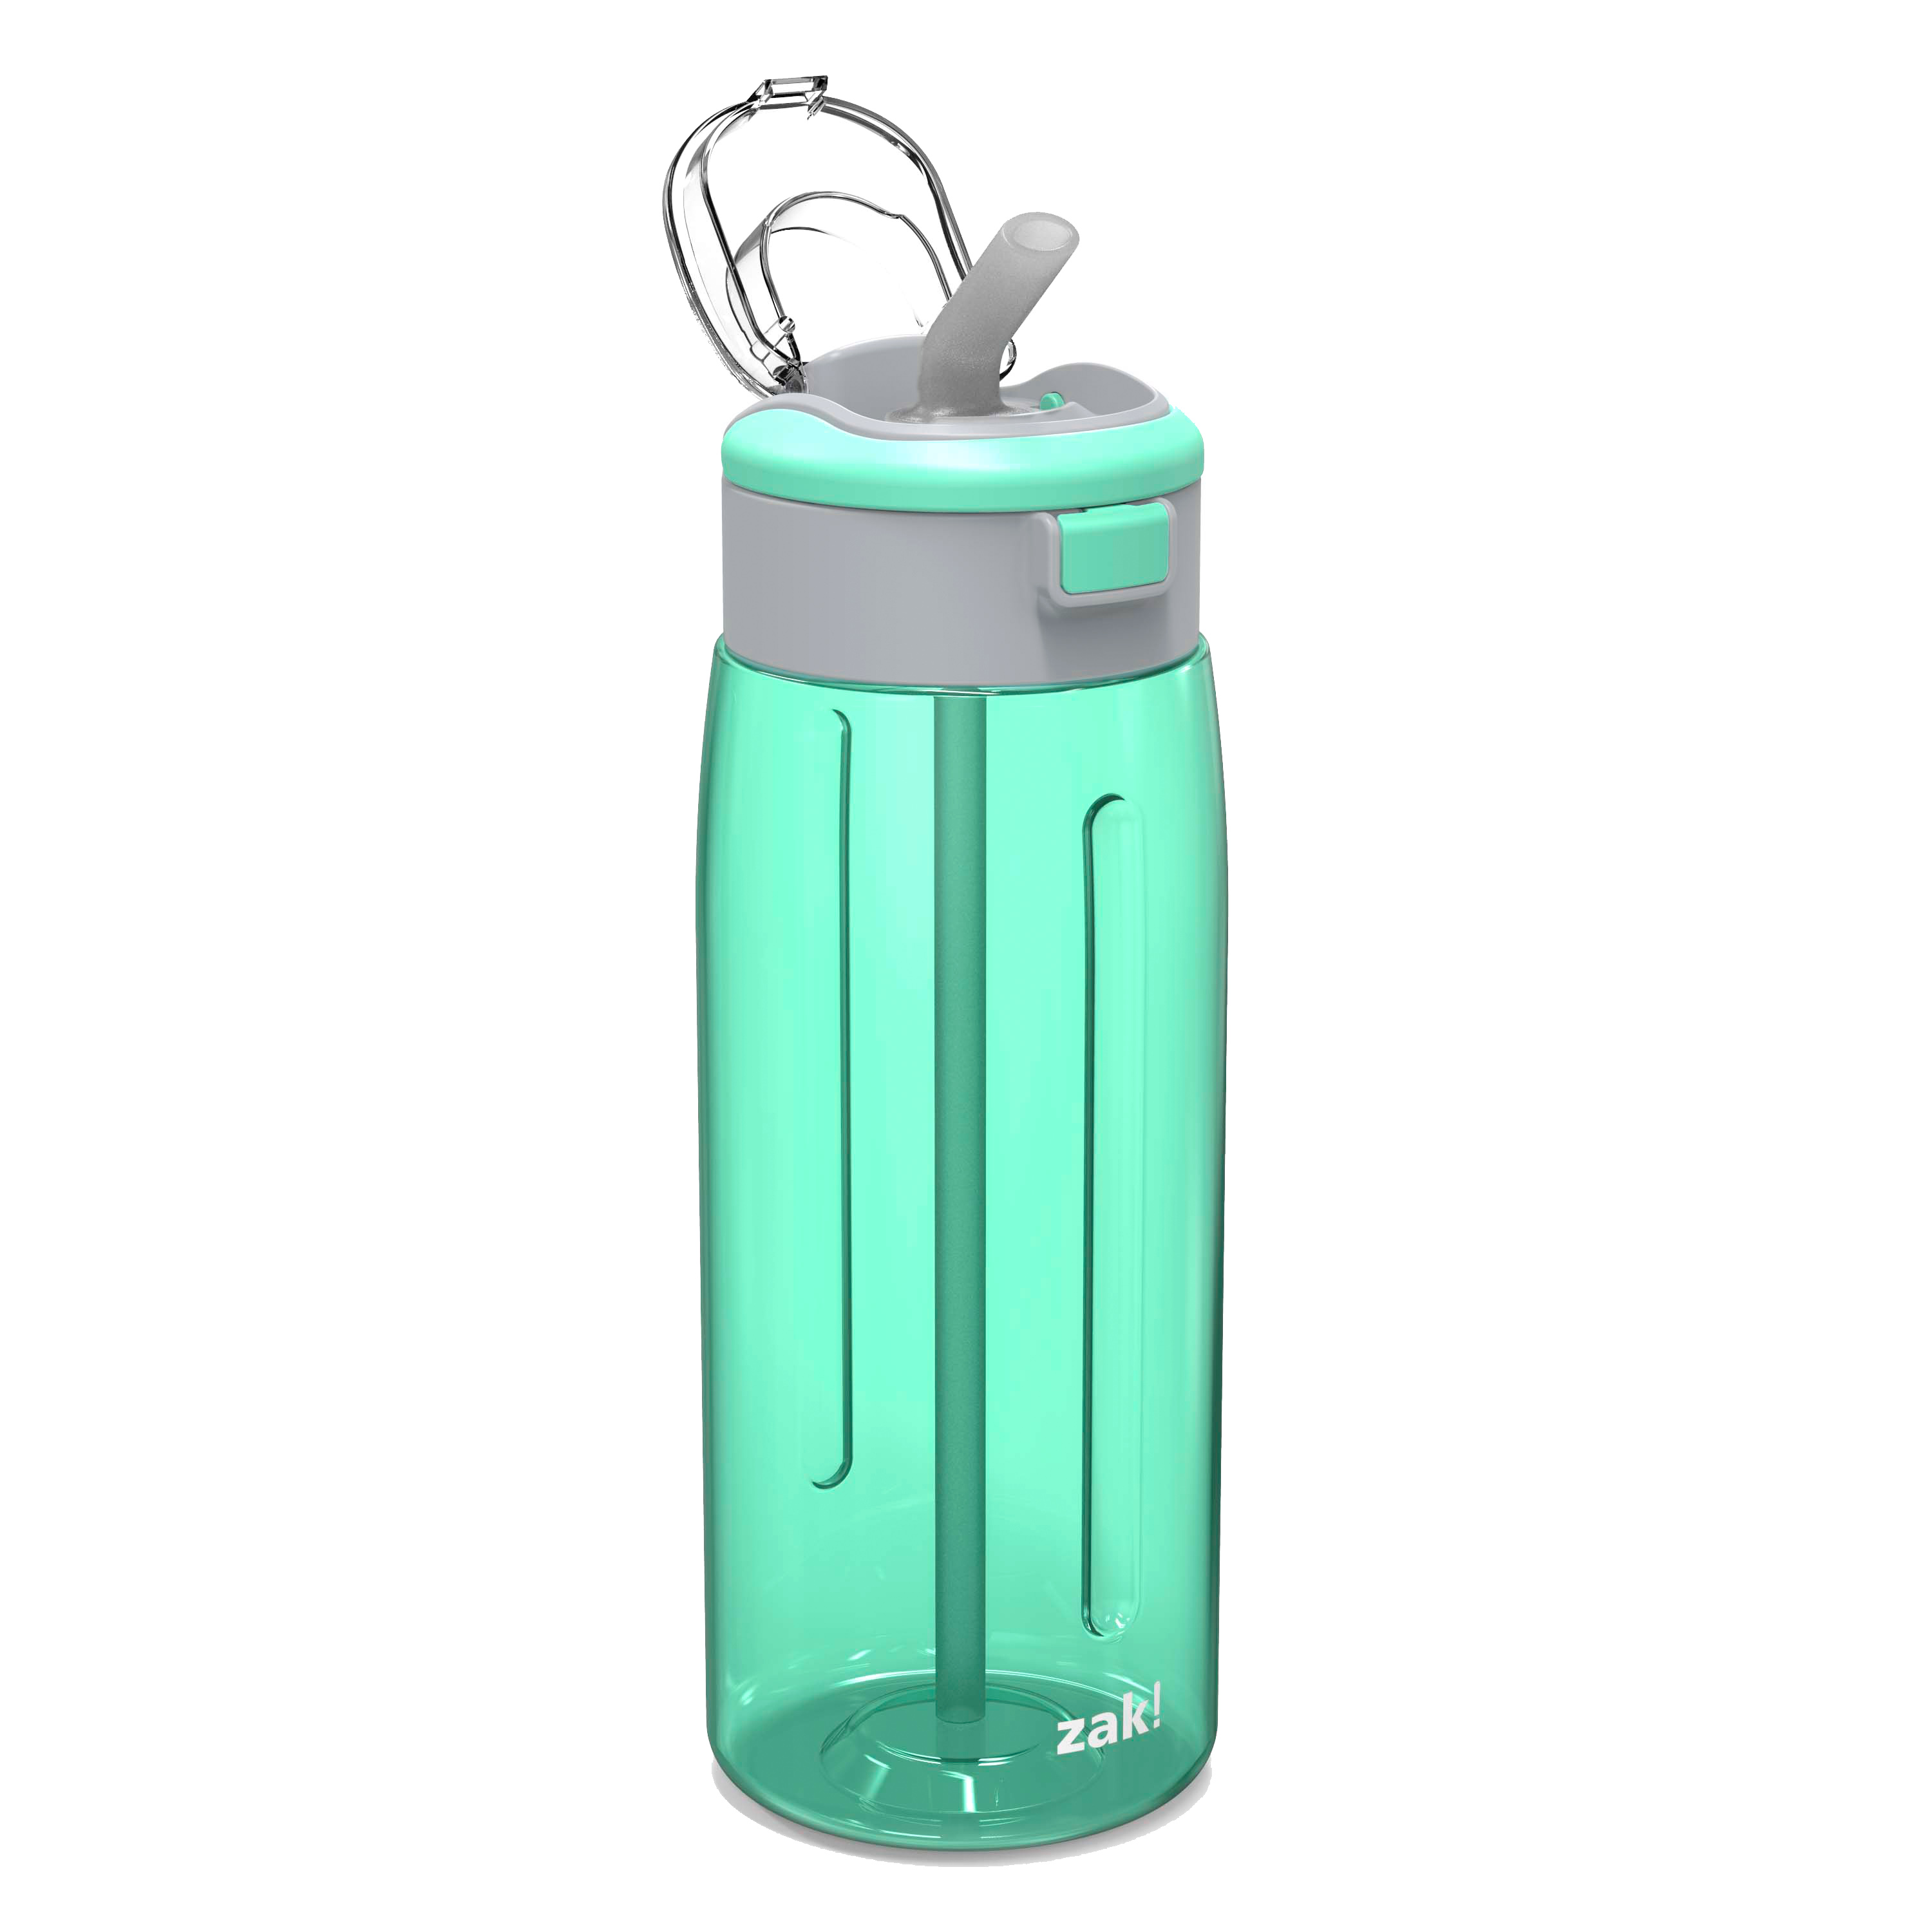 Genesis 32 ounce Reusable Plastic Water Bottle with Interchangeable Spouts, Neo Mint slideshow image 5